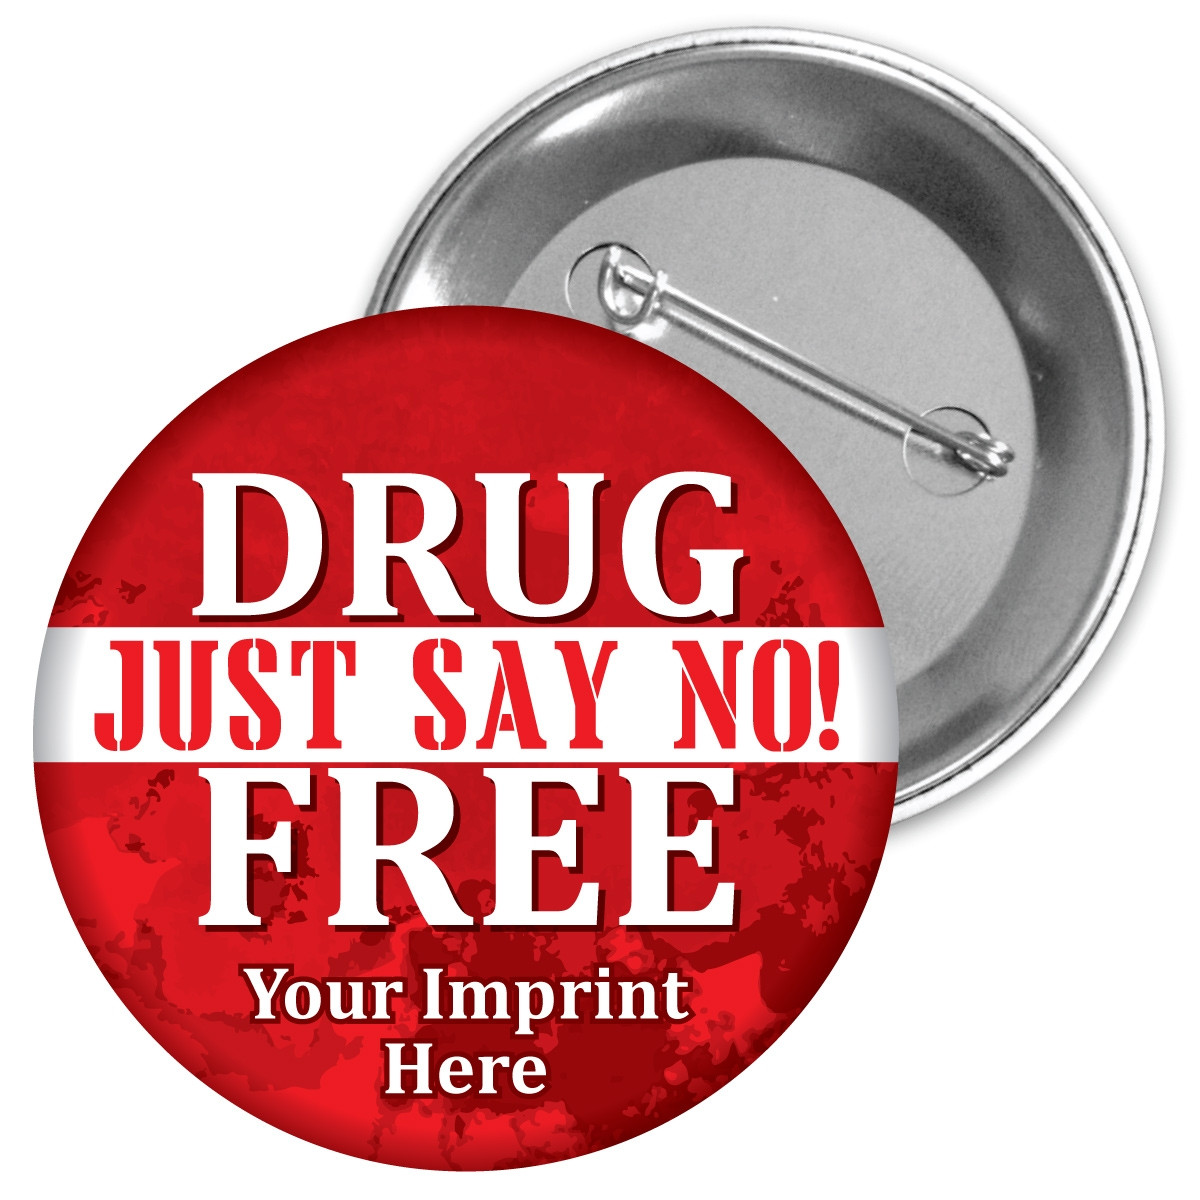 Custom Metal Button - Drug Free (Just Say No!)